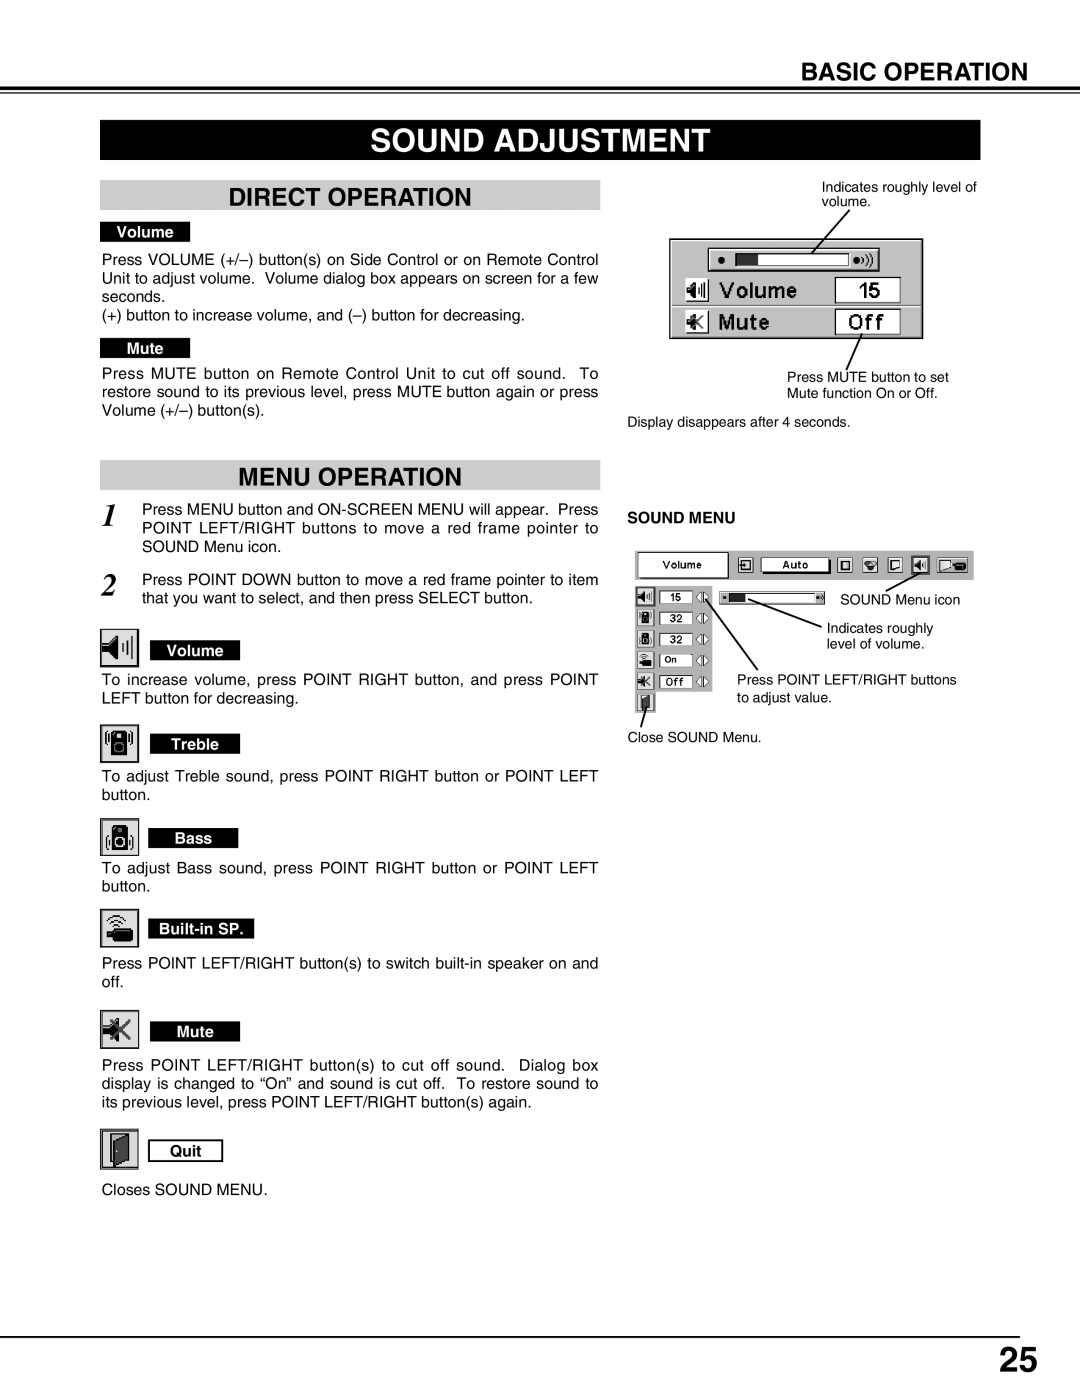 Eiki LC-UXT3 instruction manual Sound Adjustment, Direct Operation, Menu Operation, Basic Operation, Quit, Sound Menu 